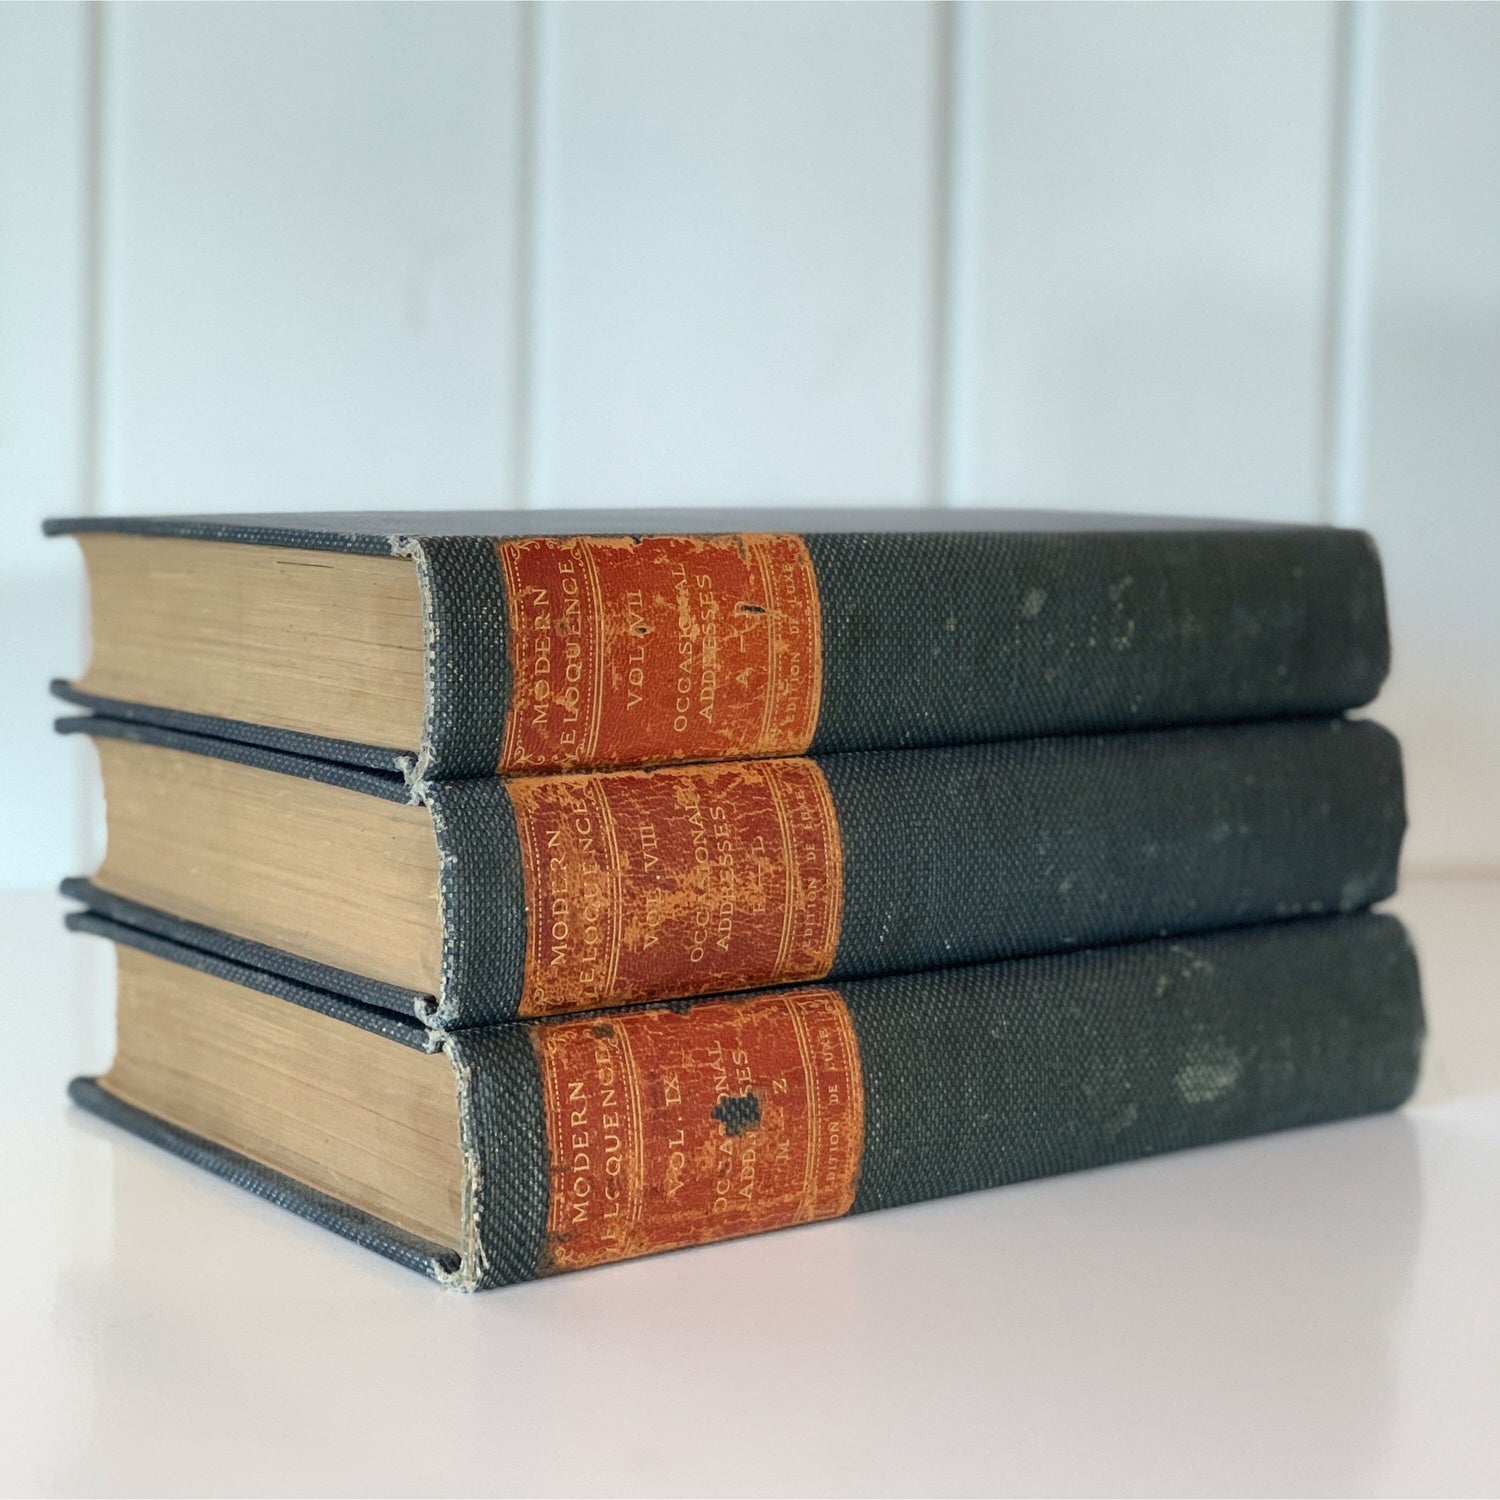 Antique 1900 Blue Decorative Books, Modern Eloquence Partial Set